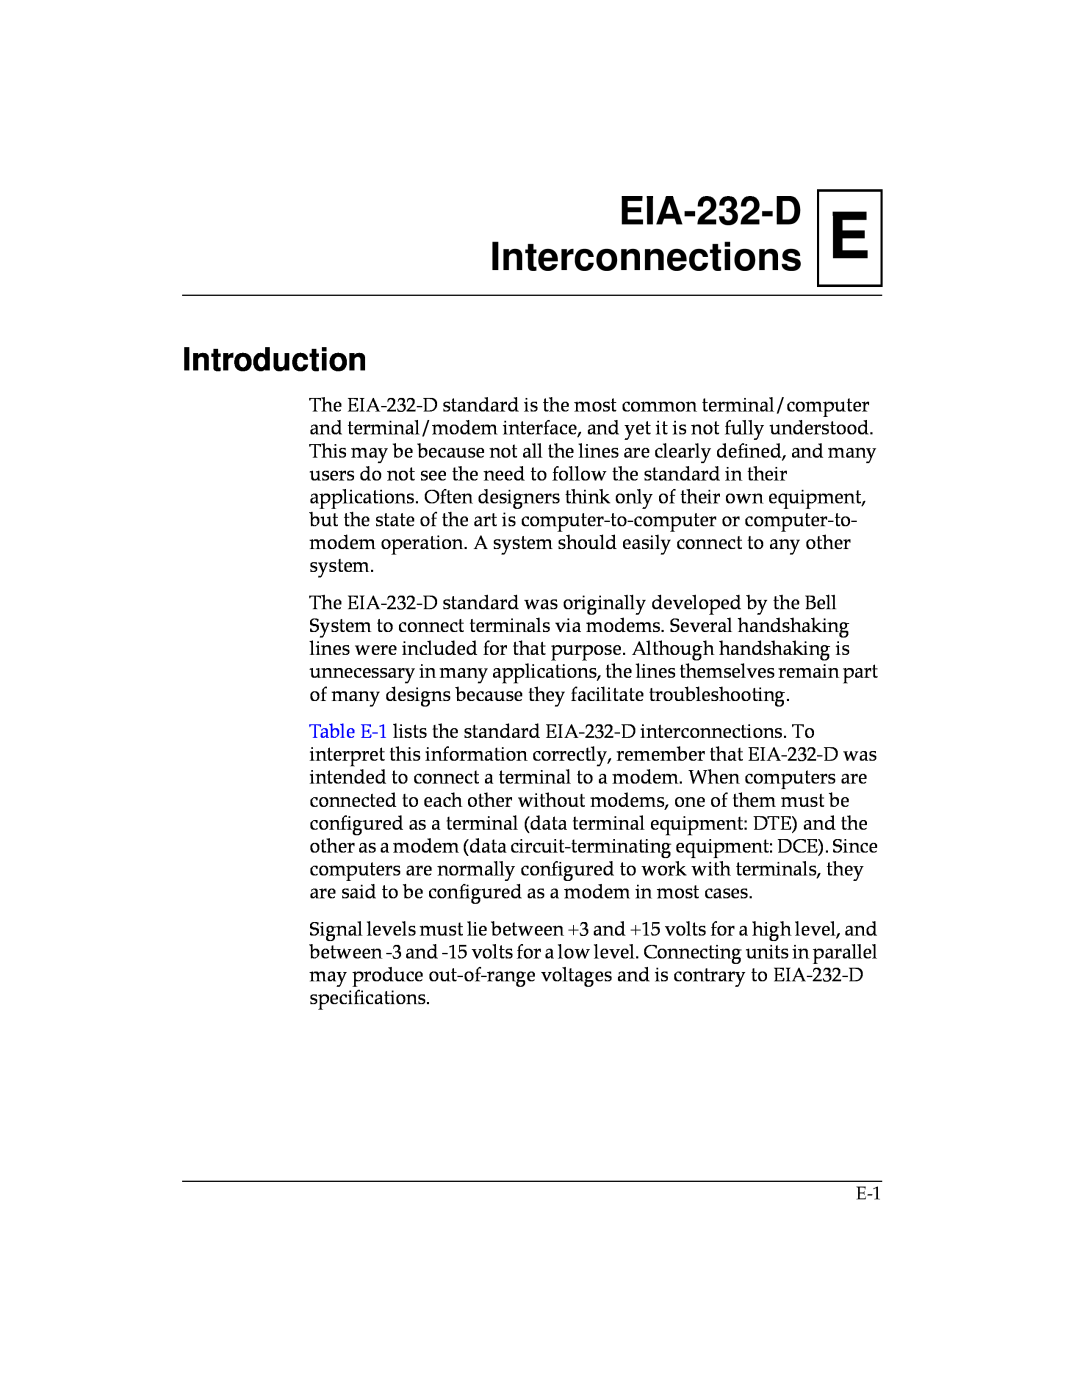 Motorola MVME187 manual EEIA-232-D Interconnections, Introduction 